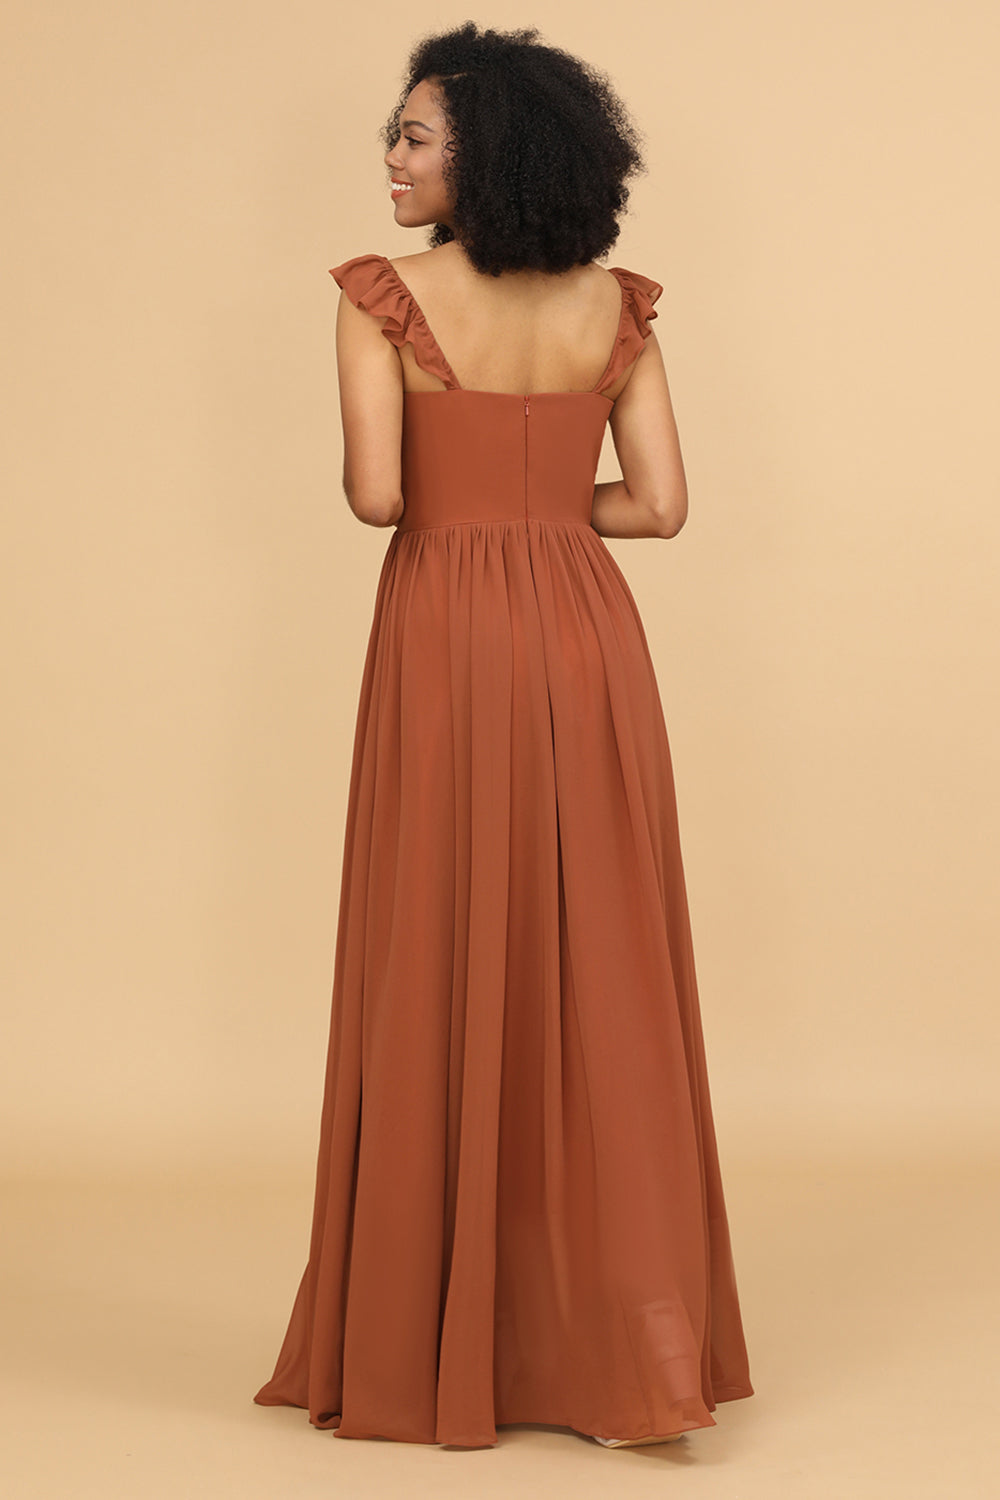 terracotta color dress